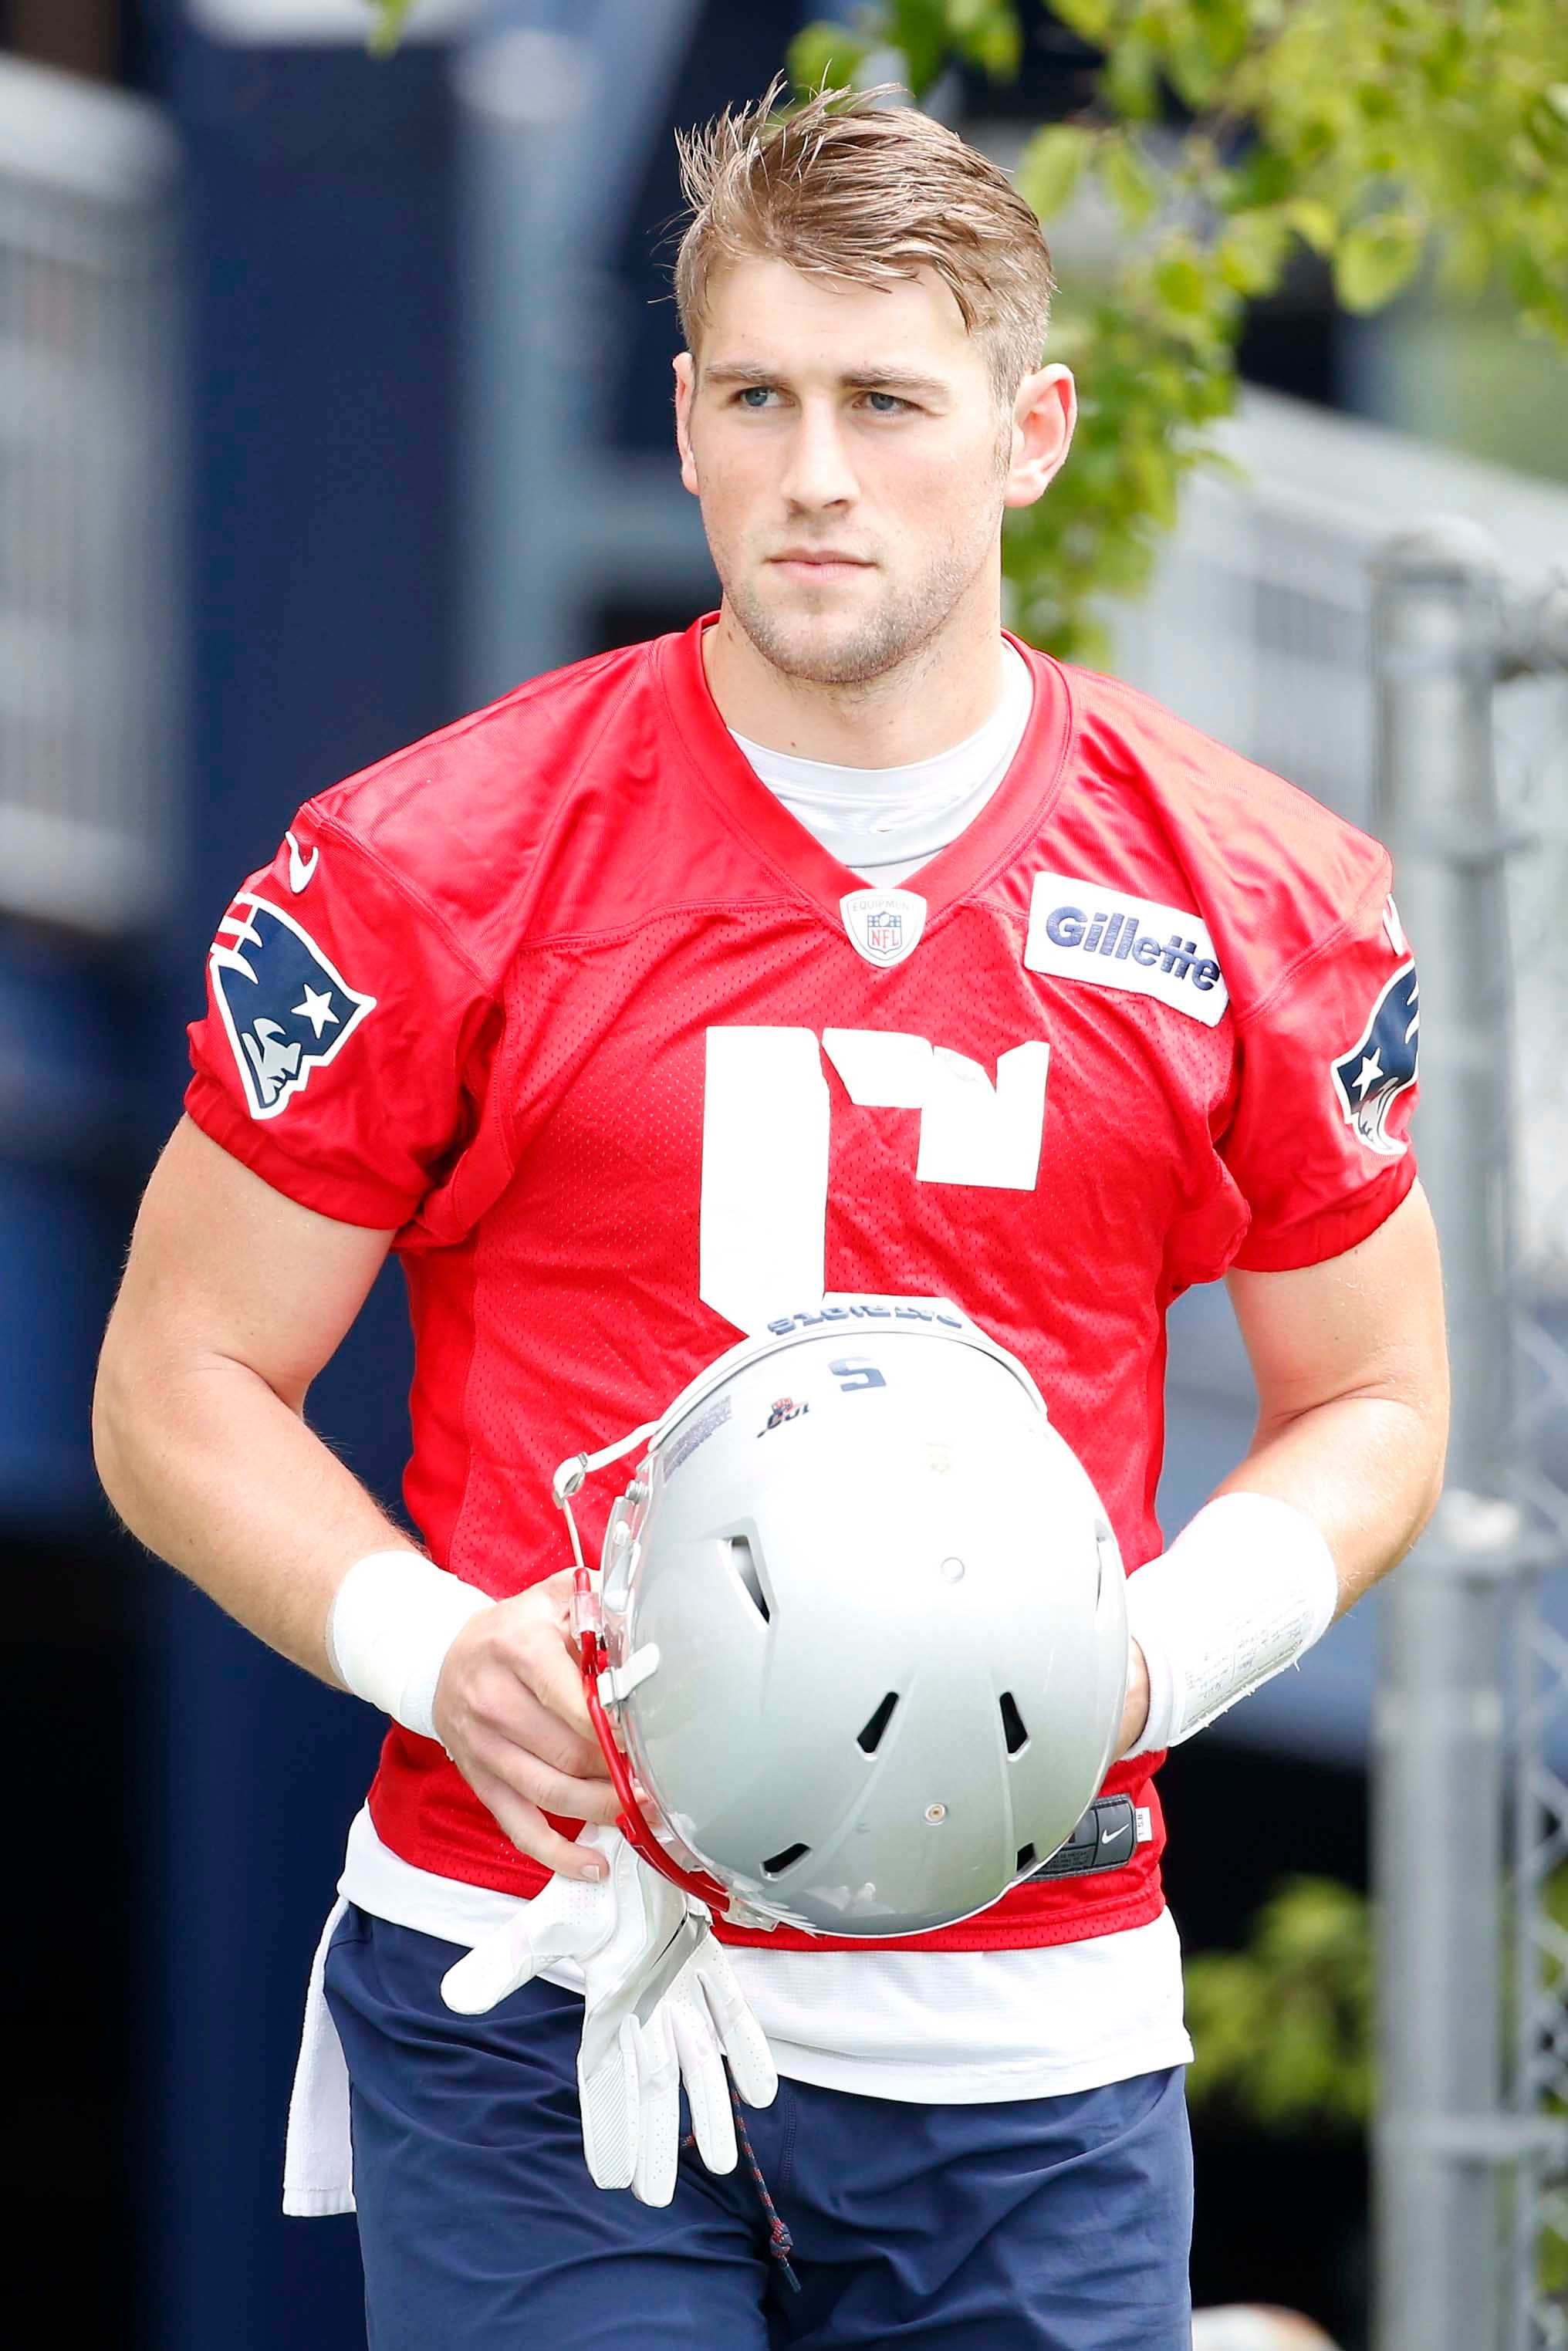 Next Julian Edelman? Patriots shift quarterback Danny Etling to wide receiver at training camp